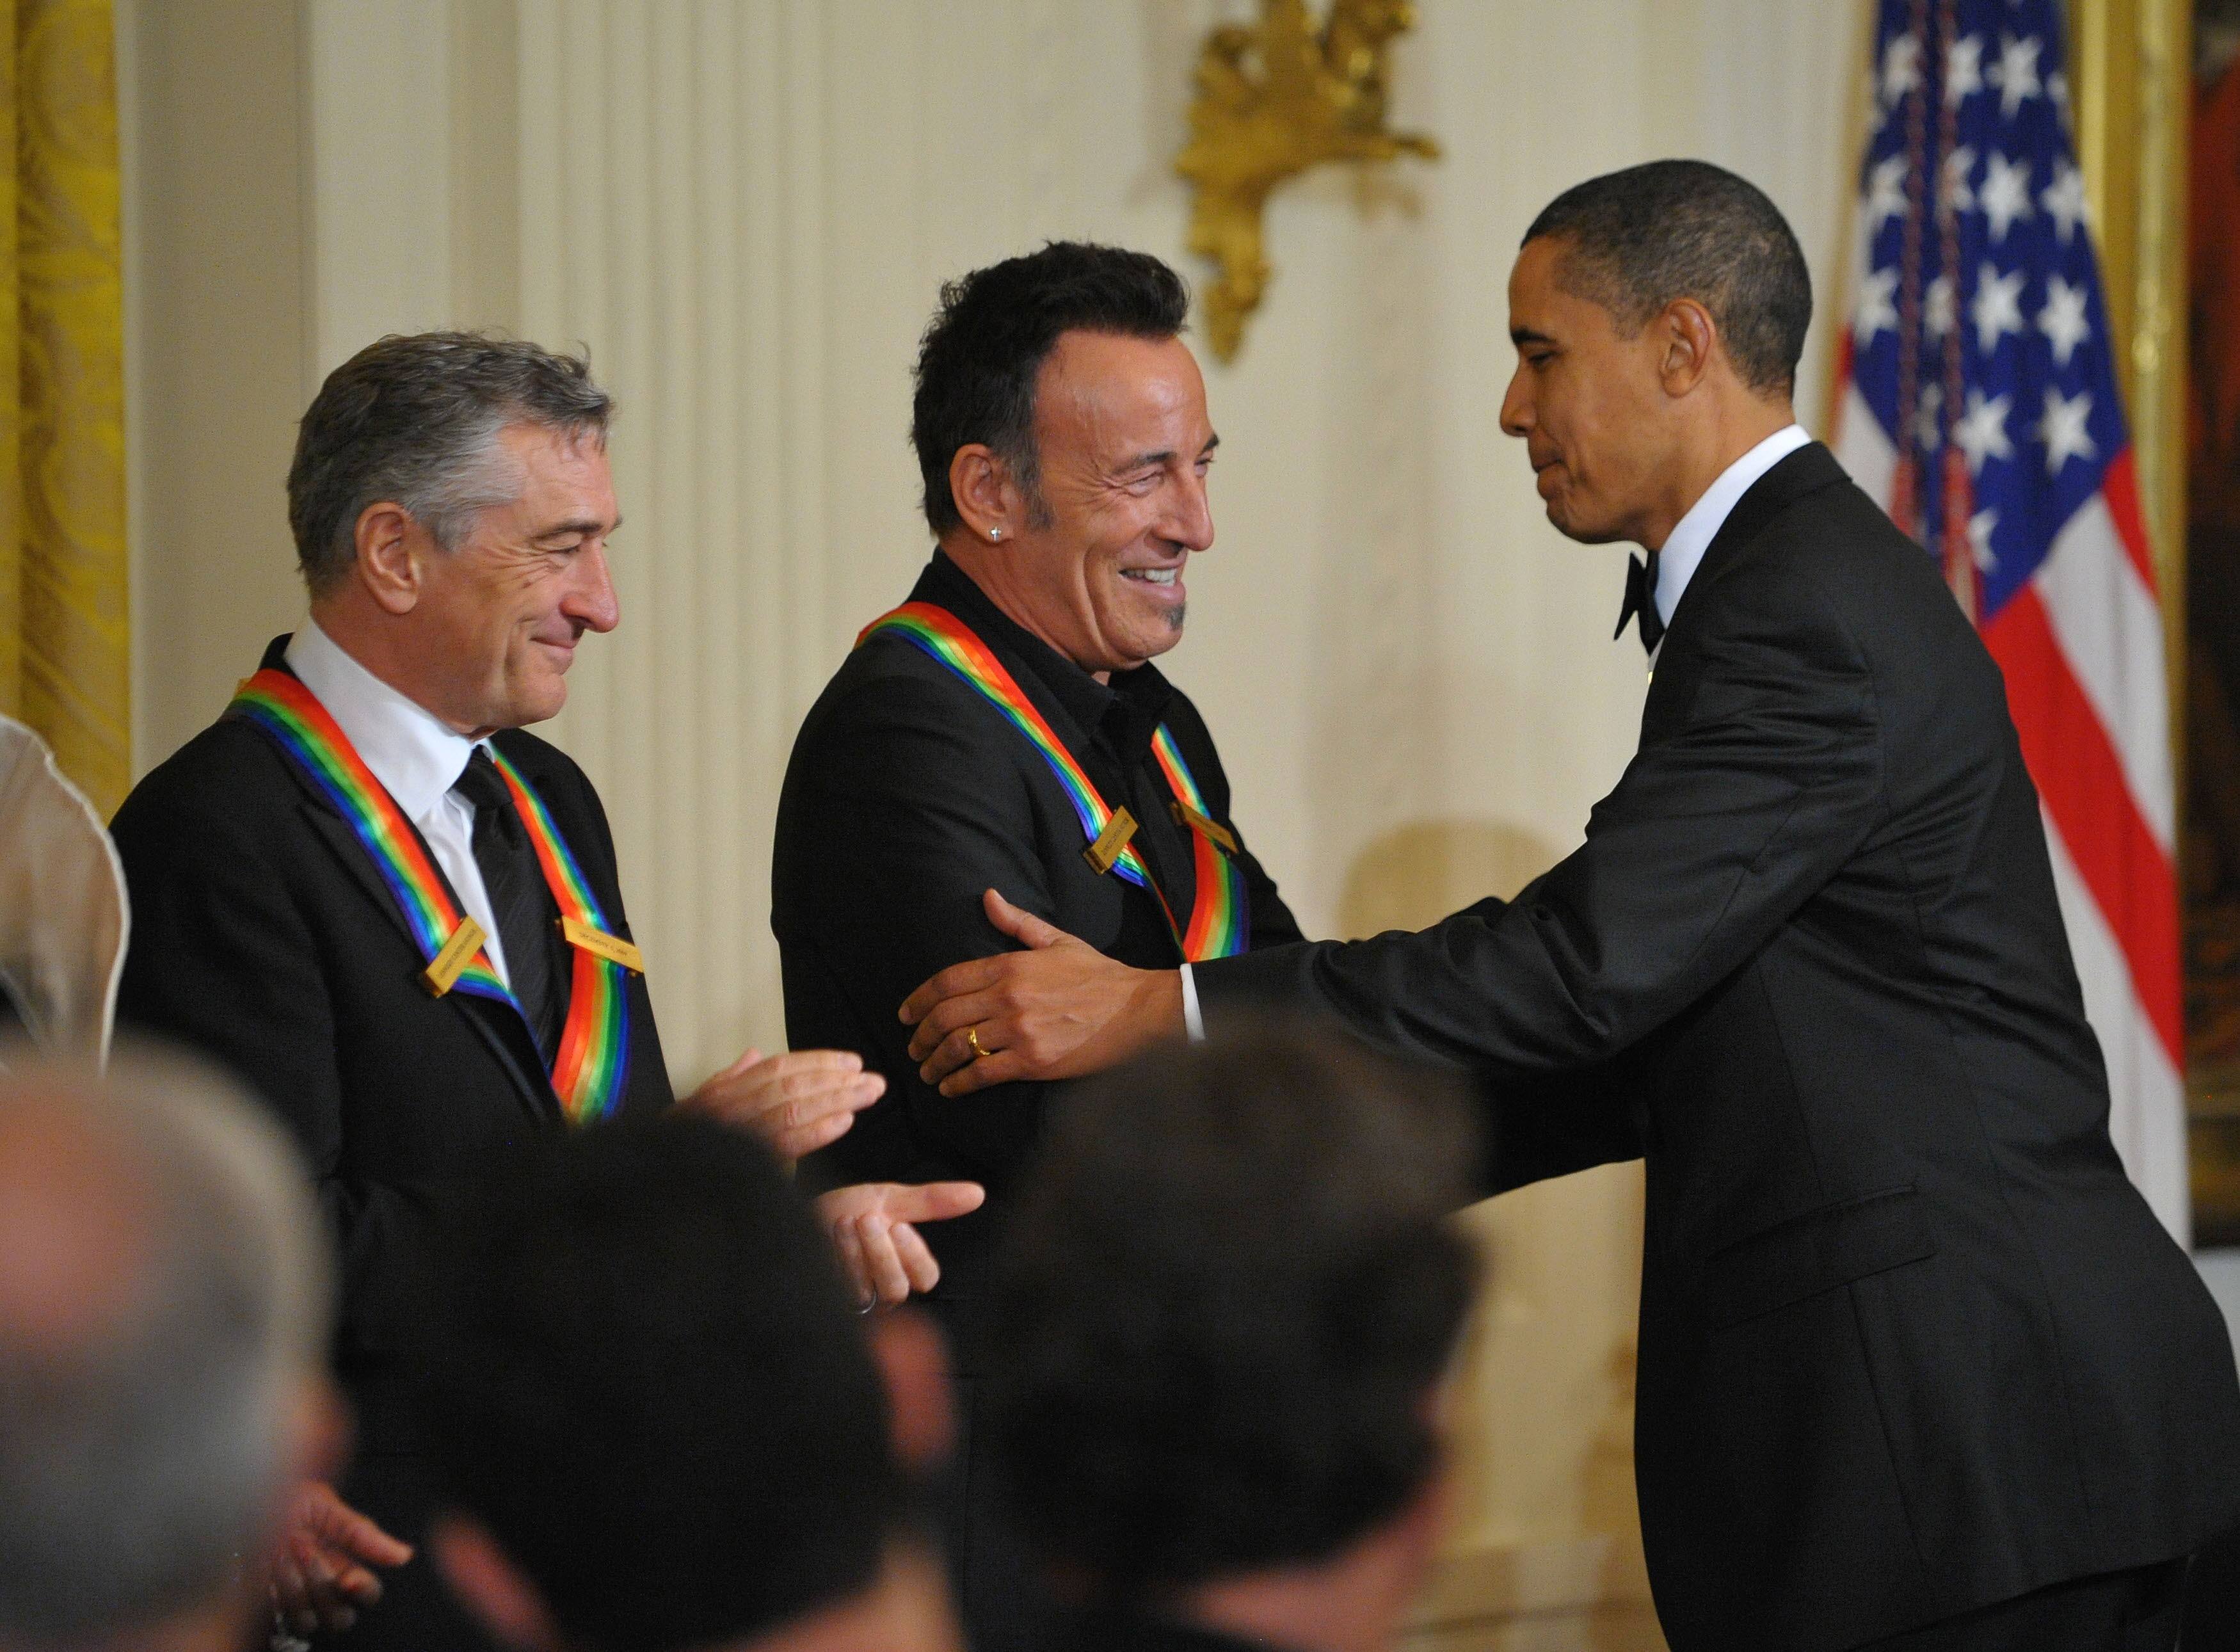 Robert De Niro, Bruce Springsteen, Barack Obama 2009 Kennedy Center Honors